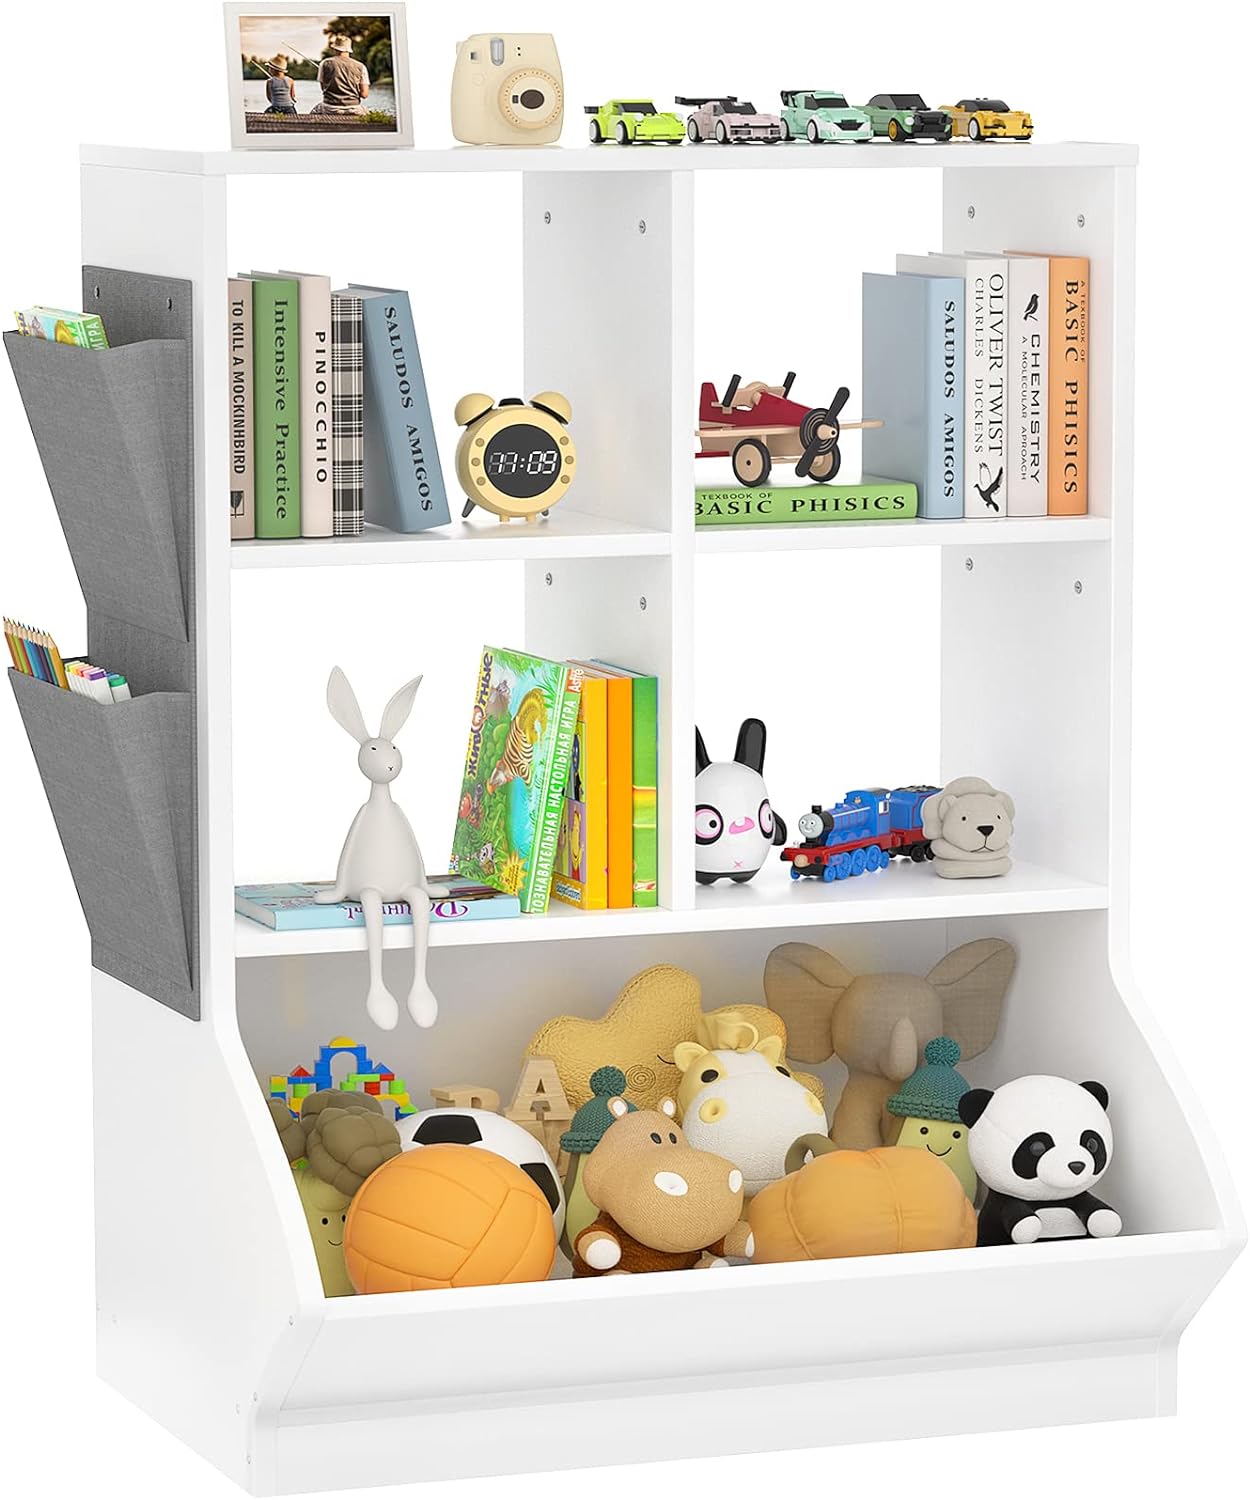 Aheaplus Toy Storage Organizer with Bookcase, 40'' Tall 5 Cubby Bookshelf Toy Storage Cabinet, Open Multi-Bins Wooden Toys&Books Storage Display Organizer for Playroom, Bedroom, Nursery, School, White